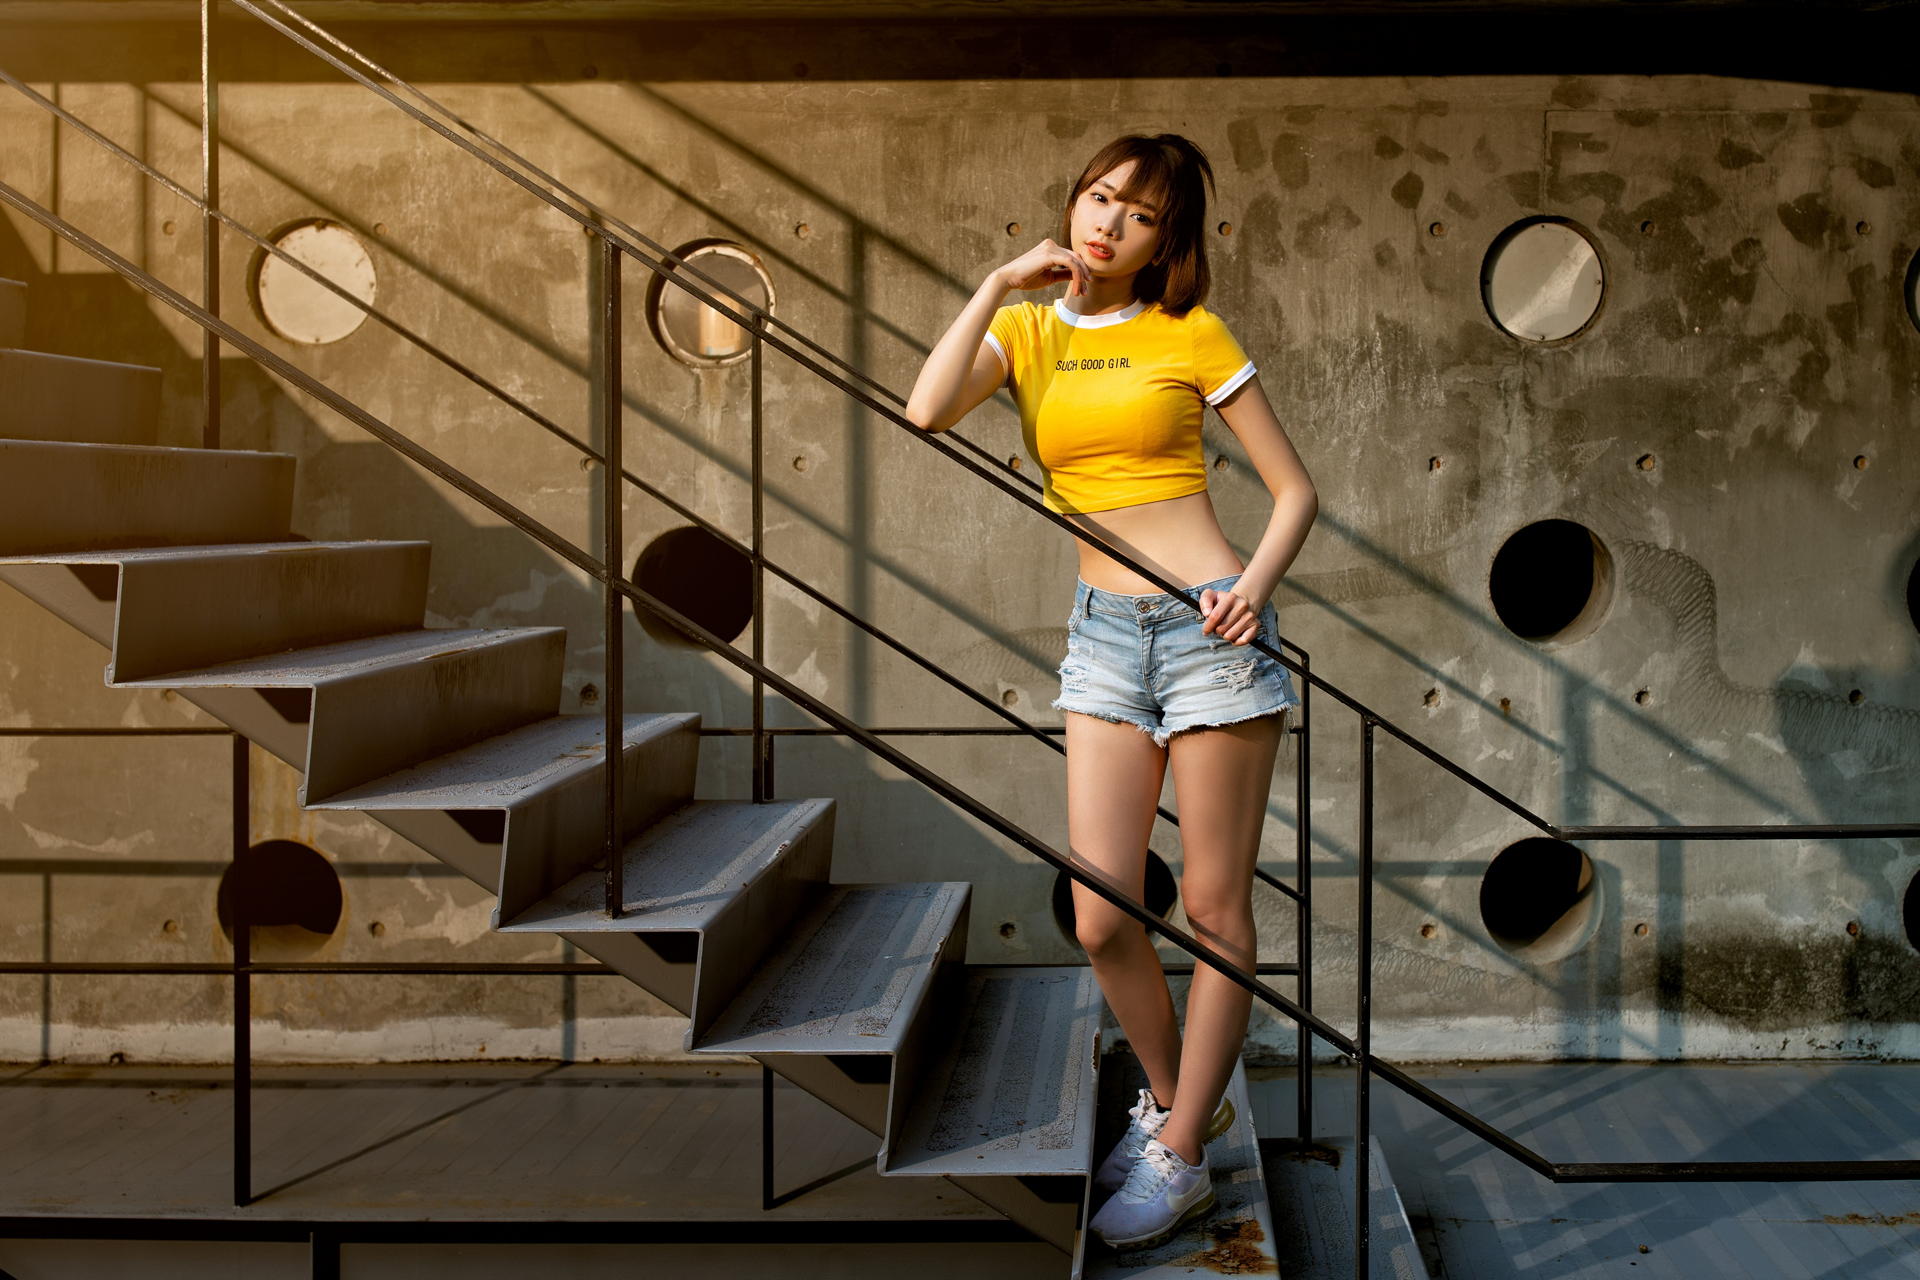 Asian Model Women Long Hair Dark Hair Stairs Yellow Tops Sneakers Ponytail Railing T Shirt Crop Top 1920x1280